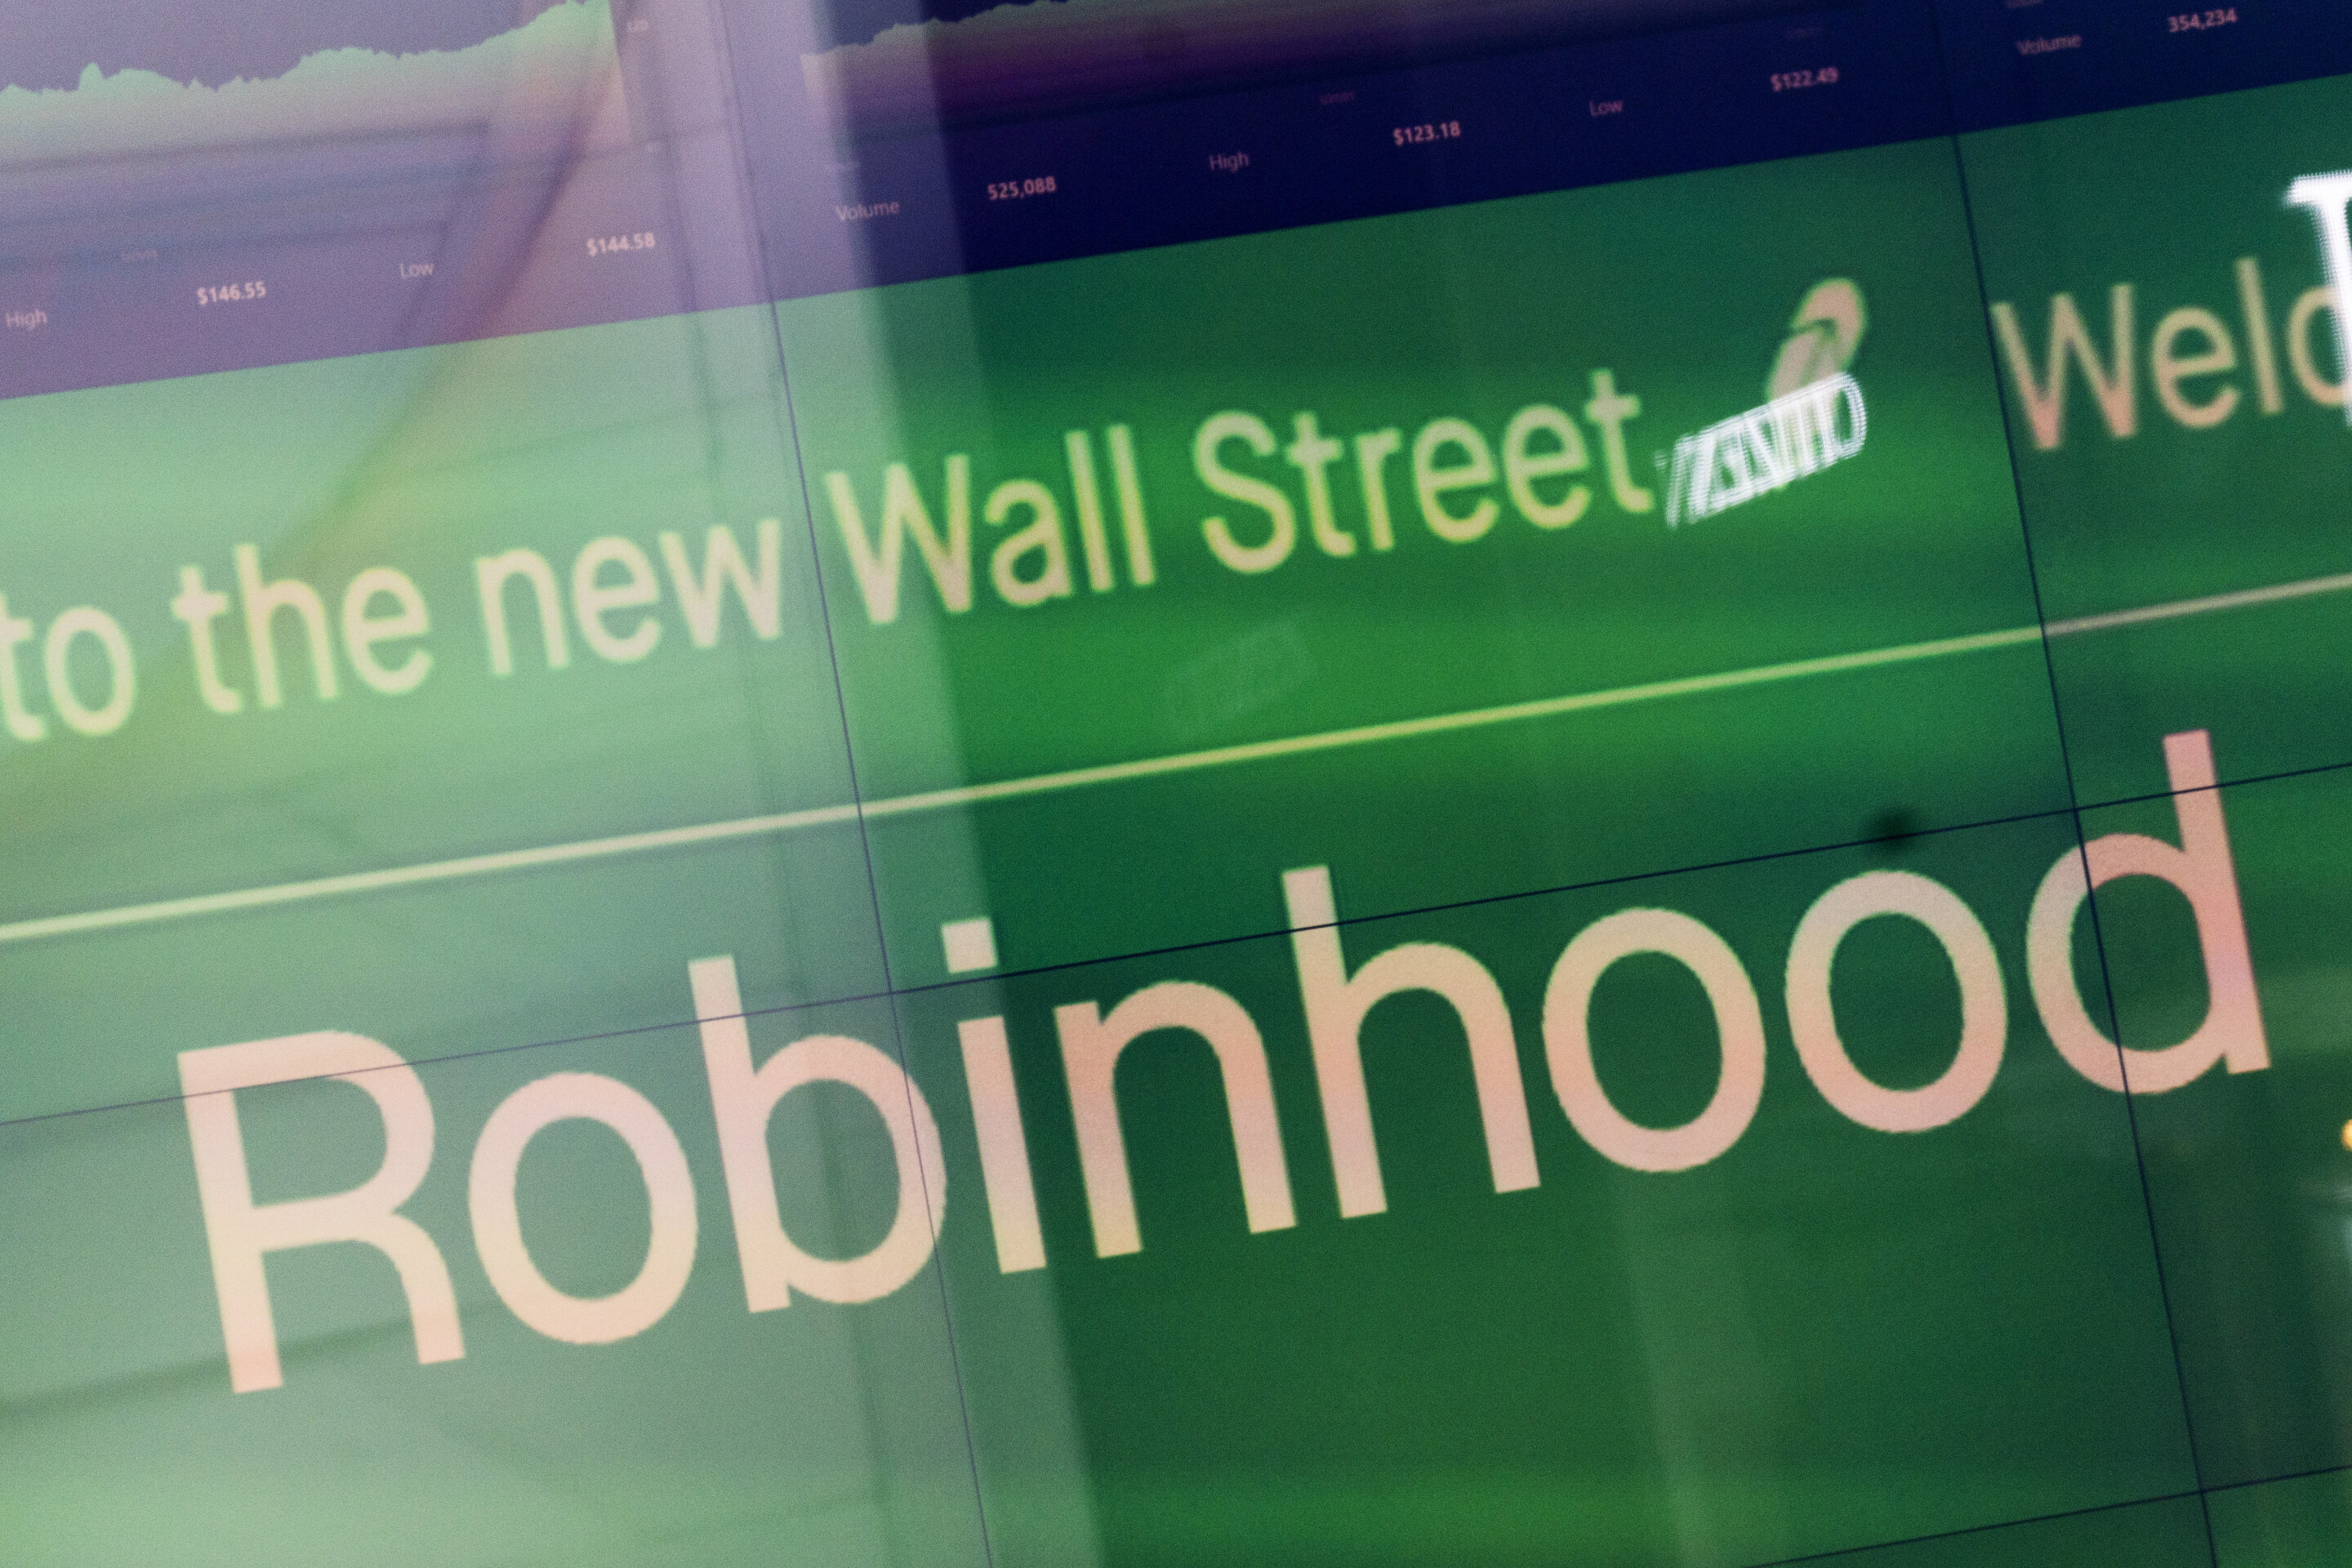 Robinhood cuts 23% of its workforce as fewer users trade